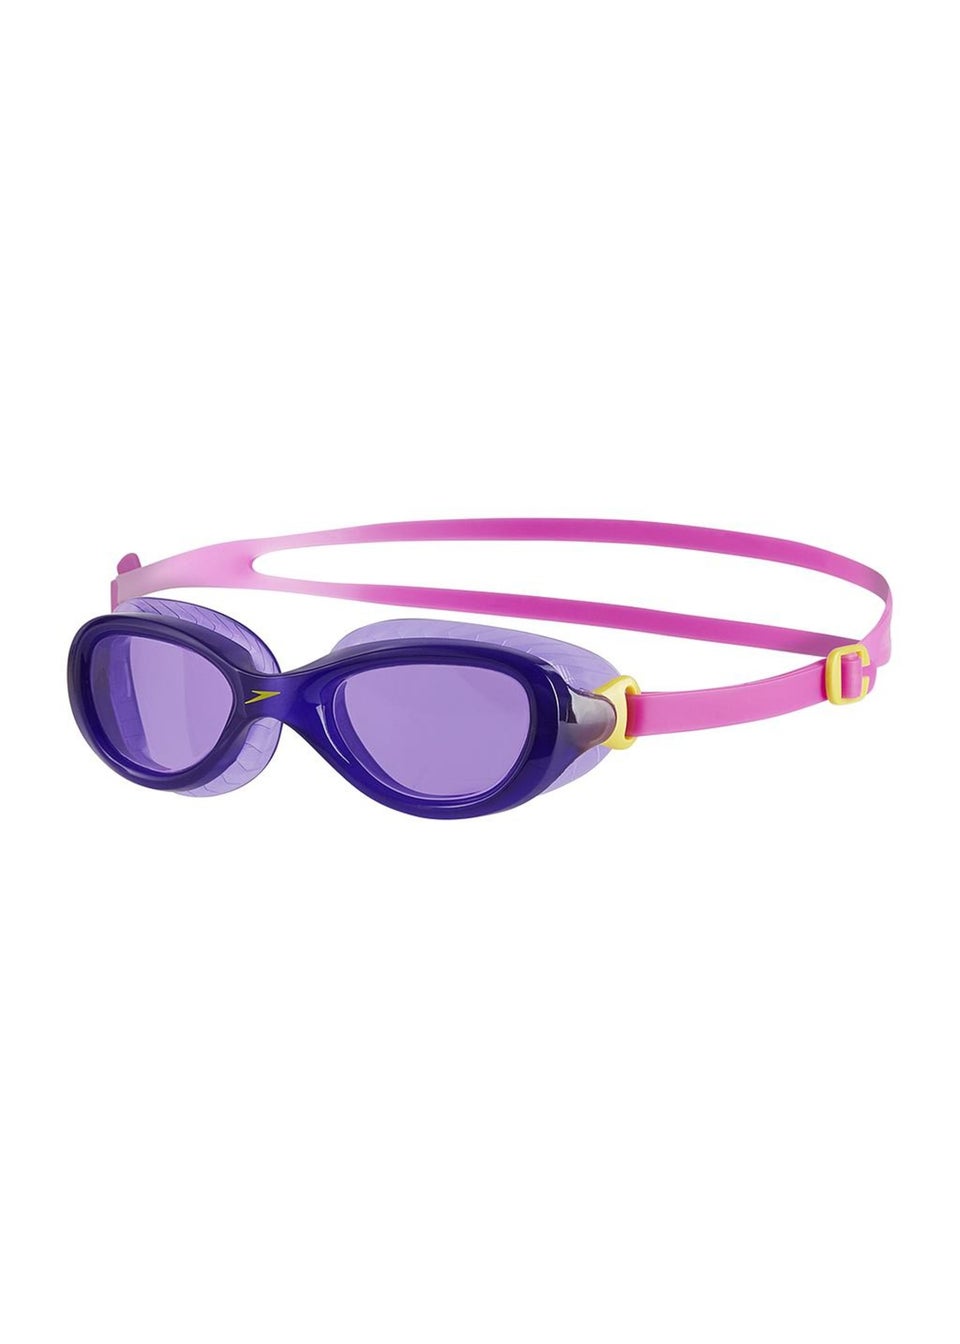 Speedo Kids Purple Futura Classic Swimming Goggles